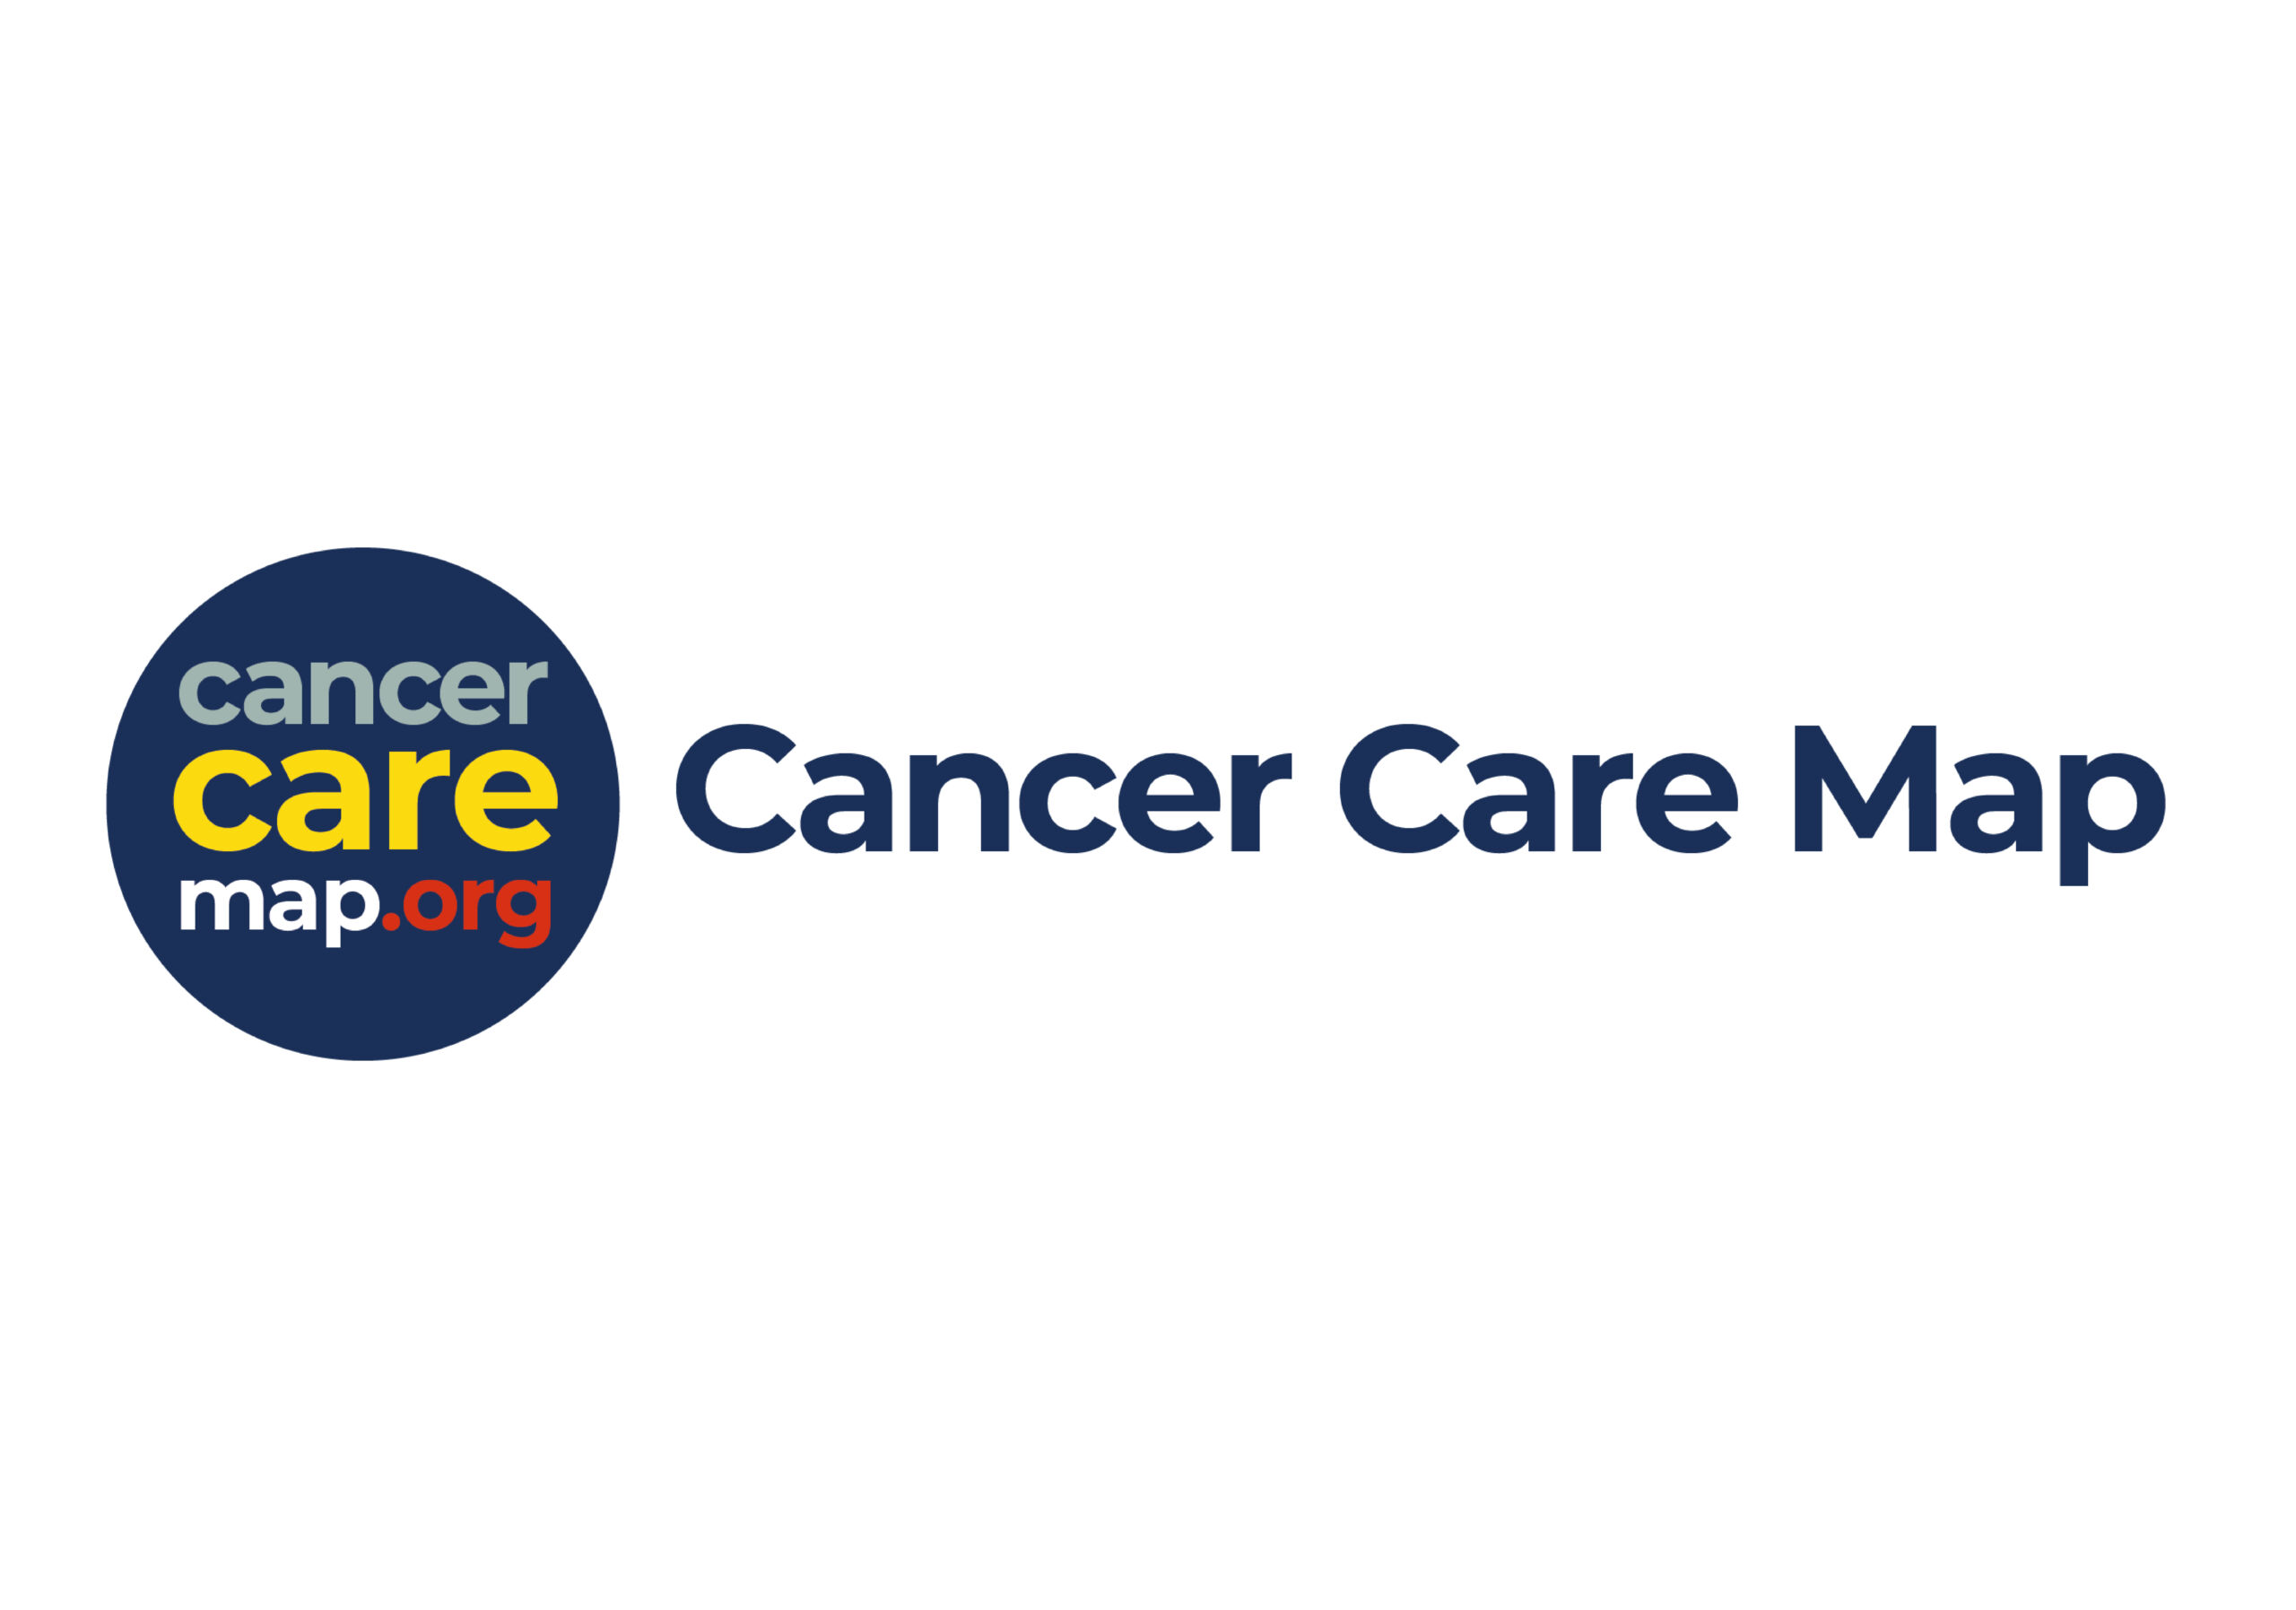 Cancer Care Map logo